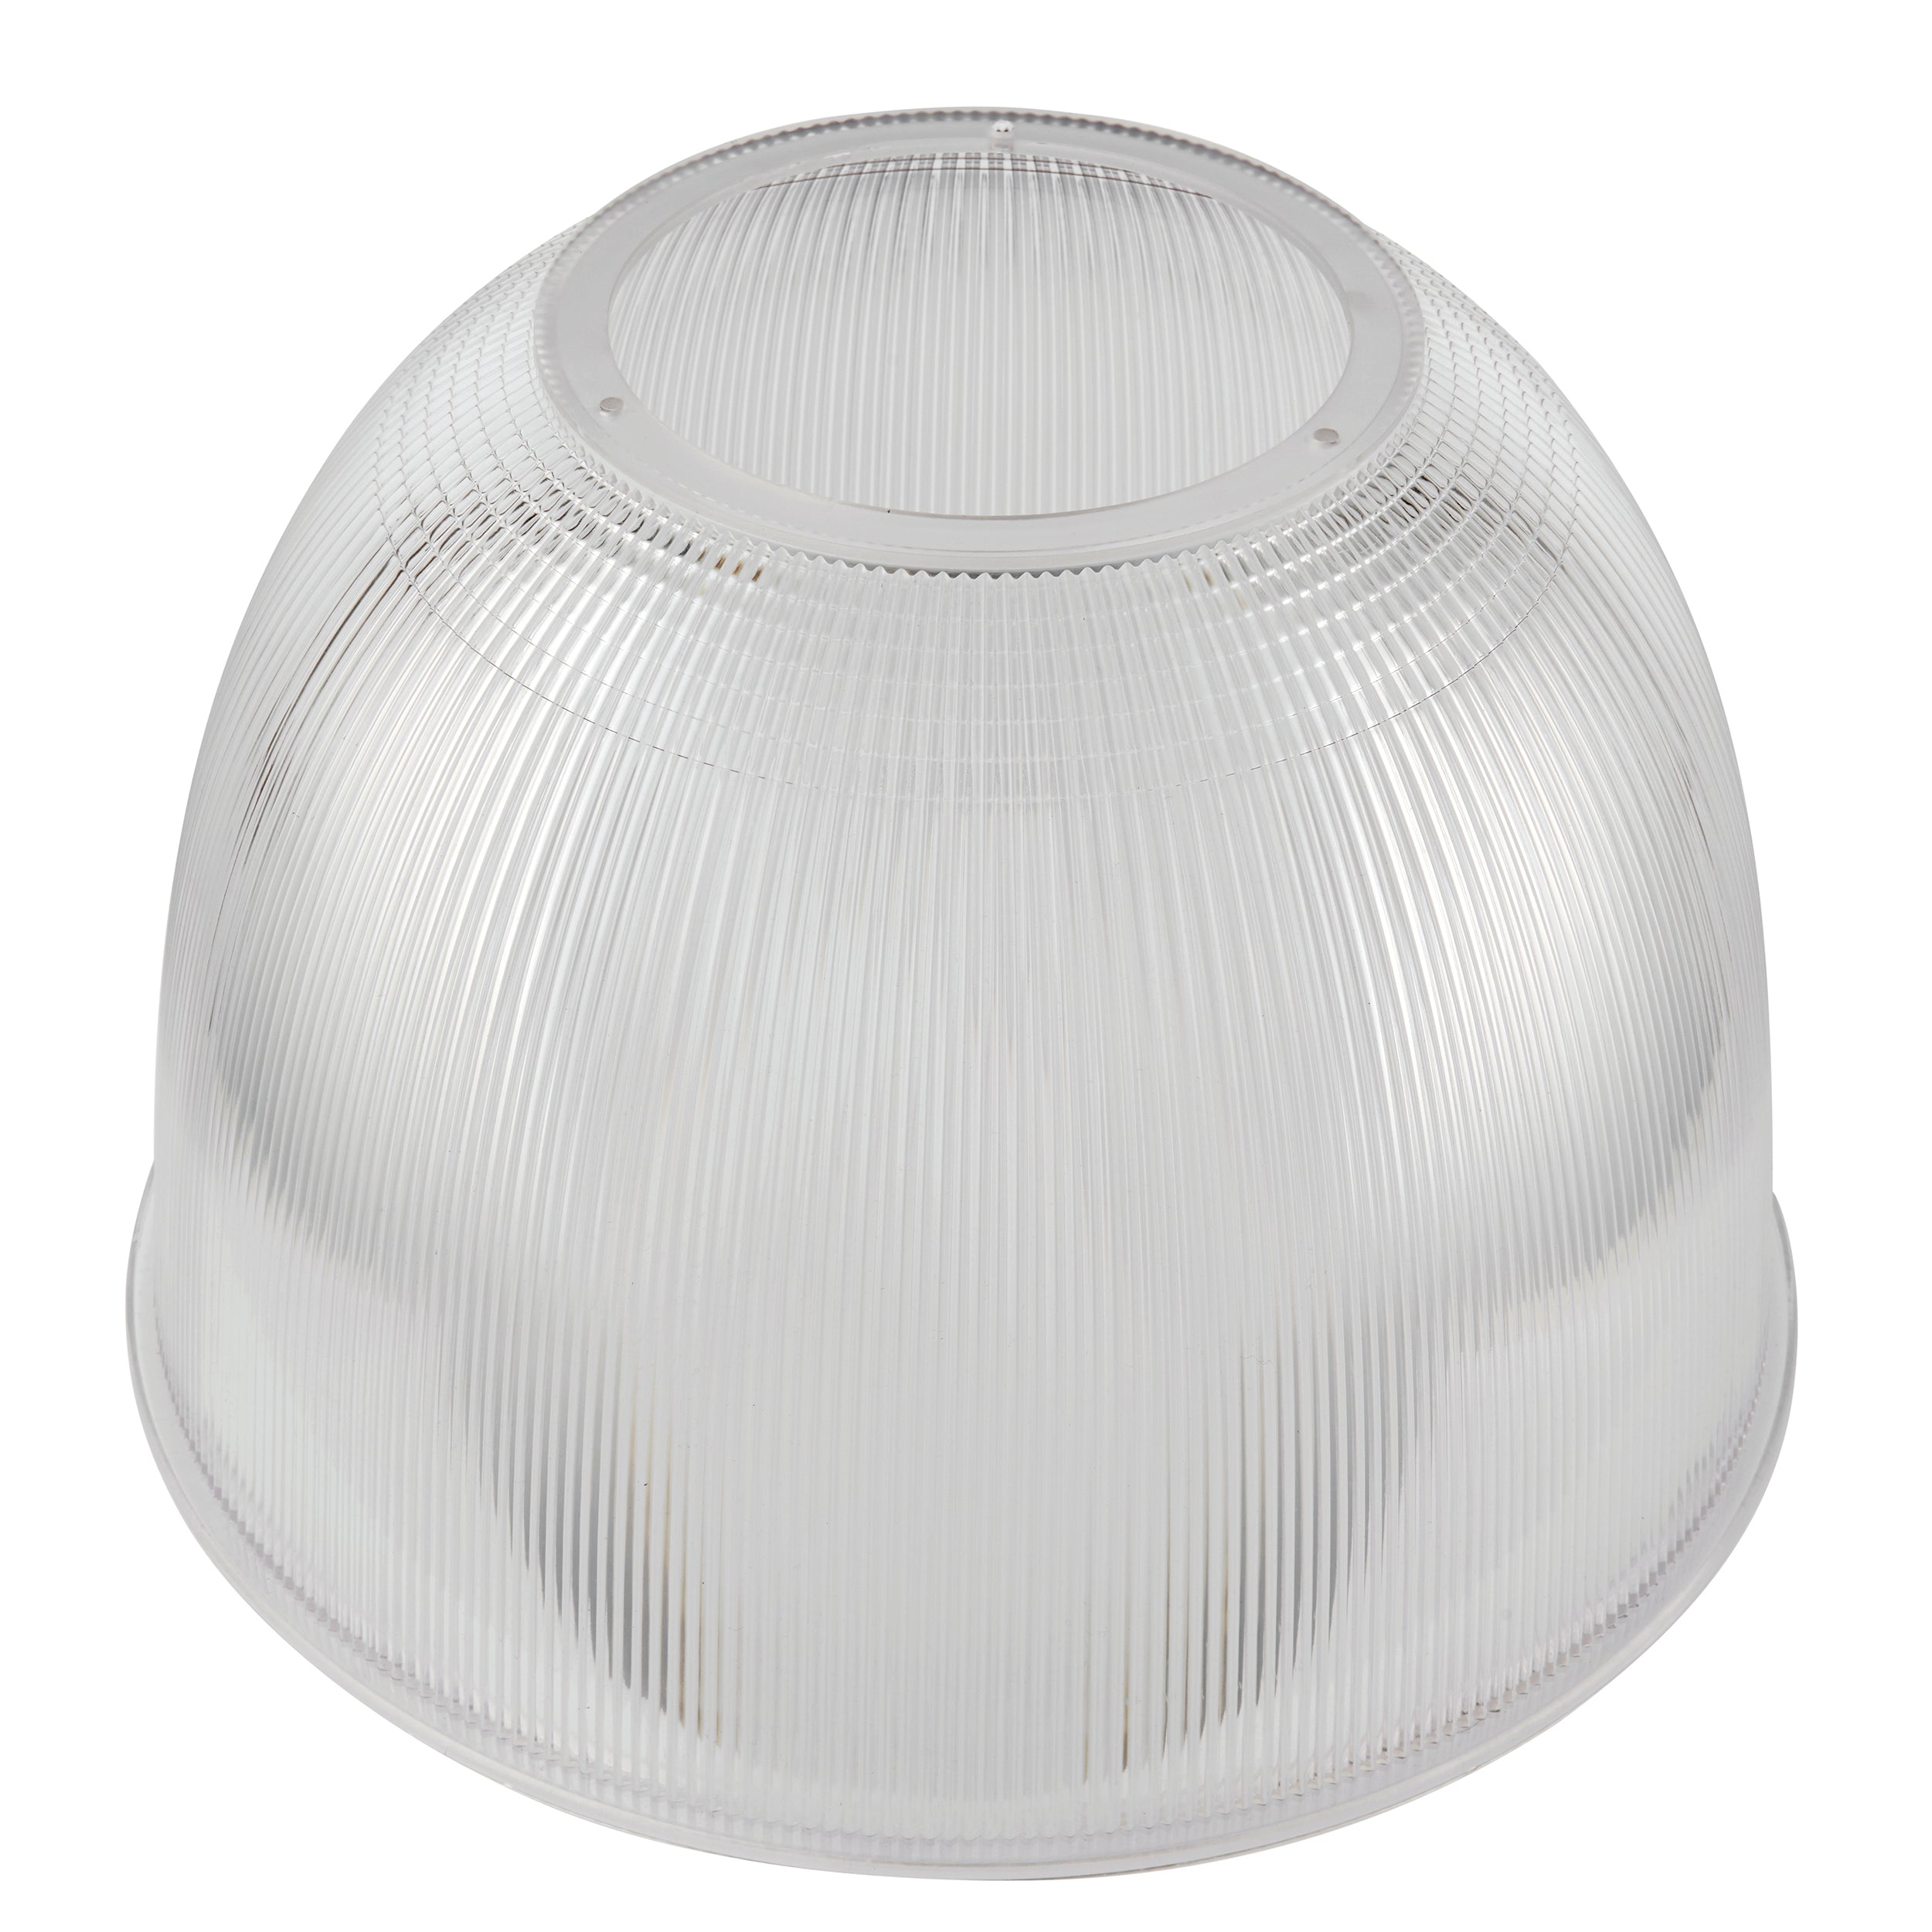 Saxby Lighting Altum polycarbonate shade 78580